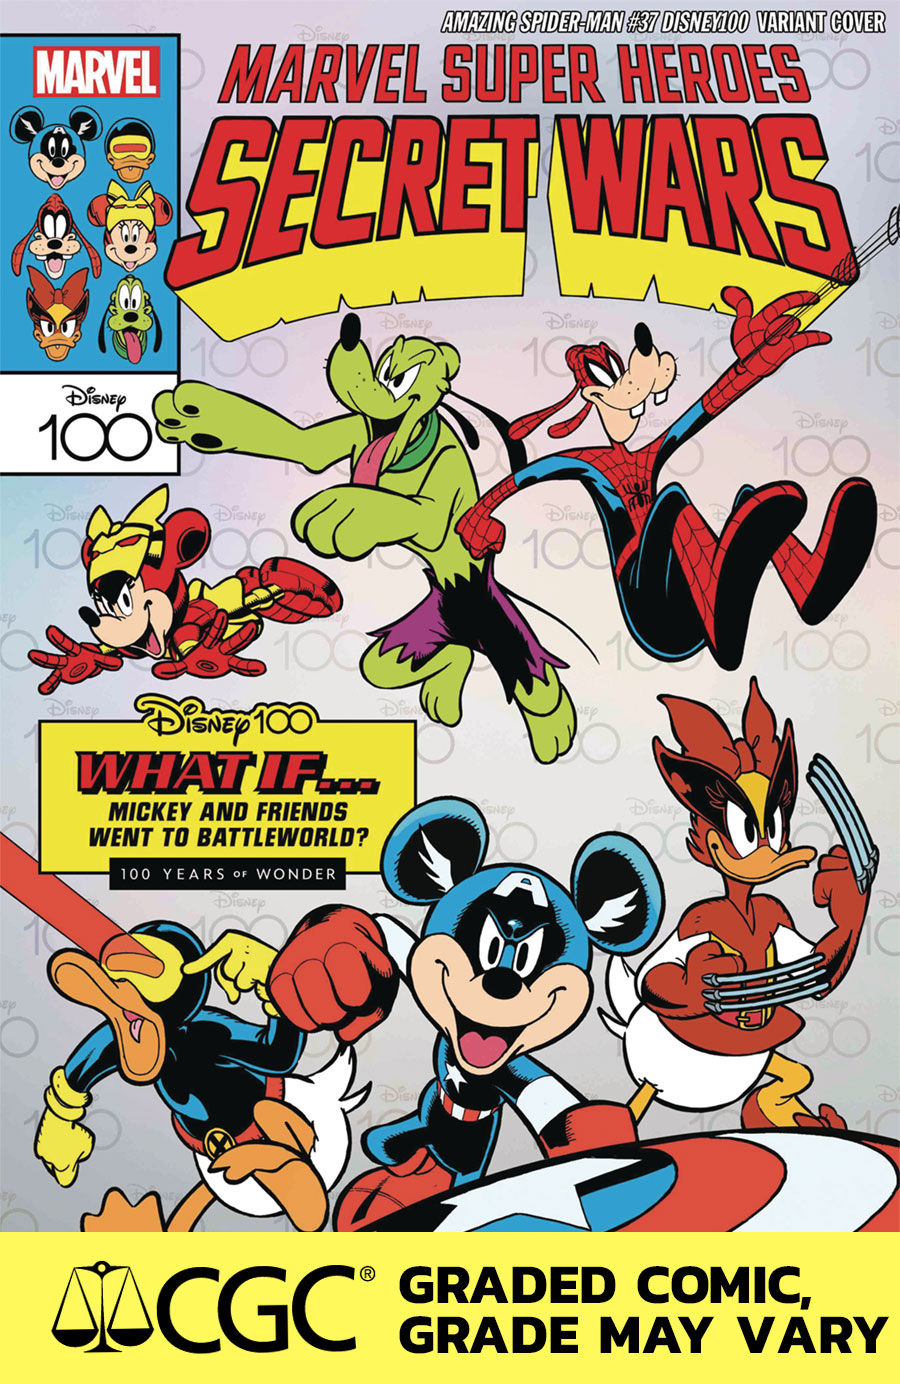 Amazing Spider-Man Vol 6 #37 Cover I DF Paolo De Lorenzi Disney100 Secret Wars Homage Variant Cover CGC Graded 9.6 Or Higher